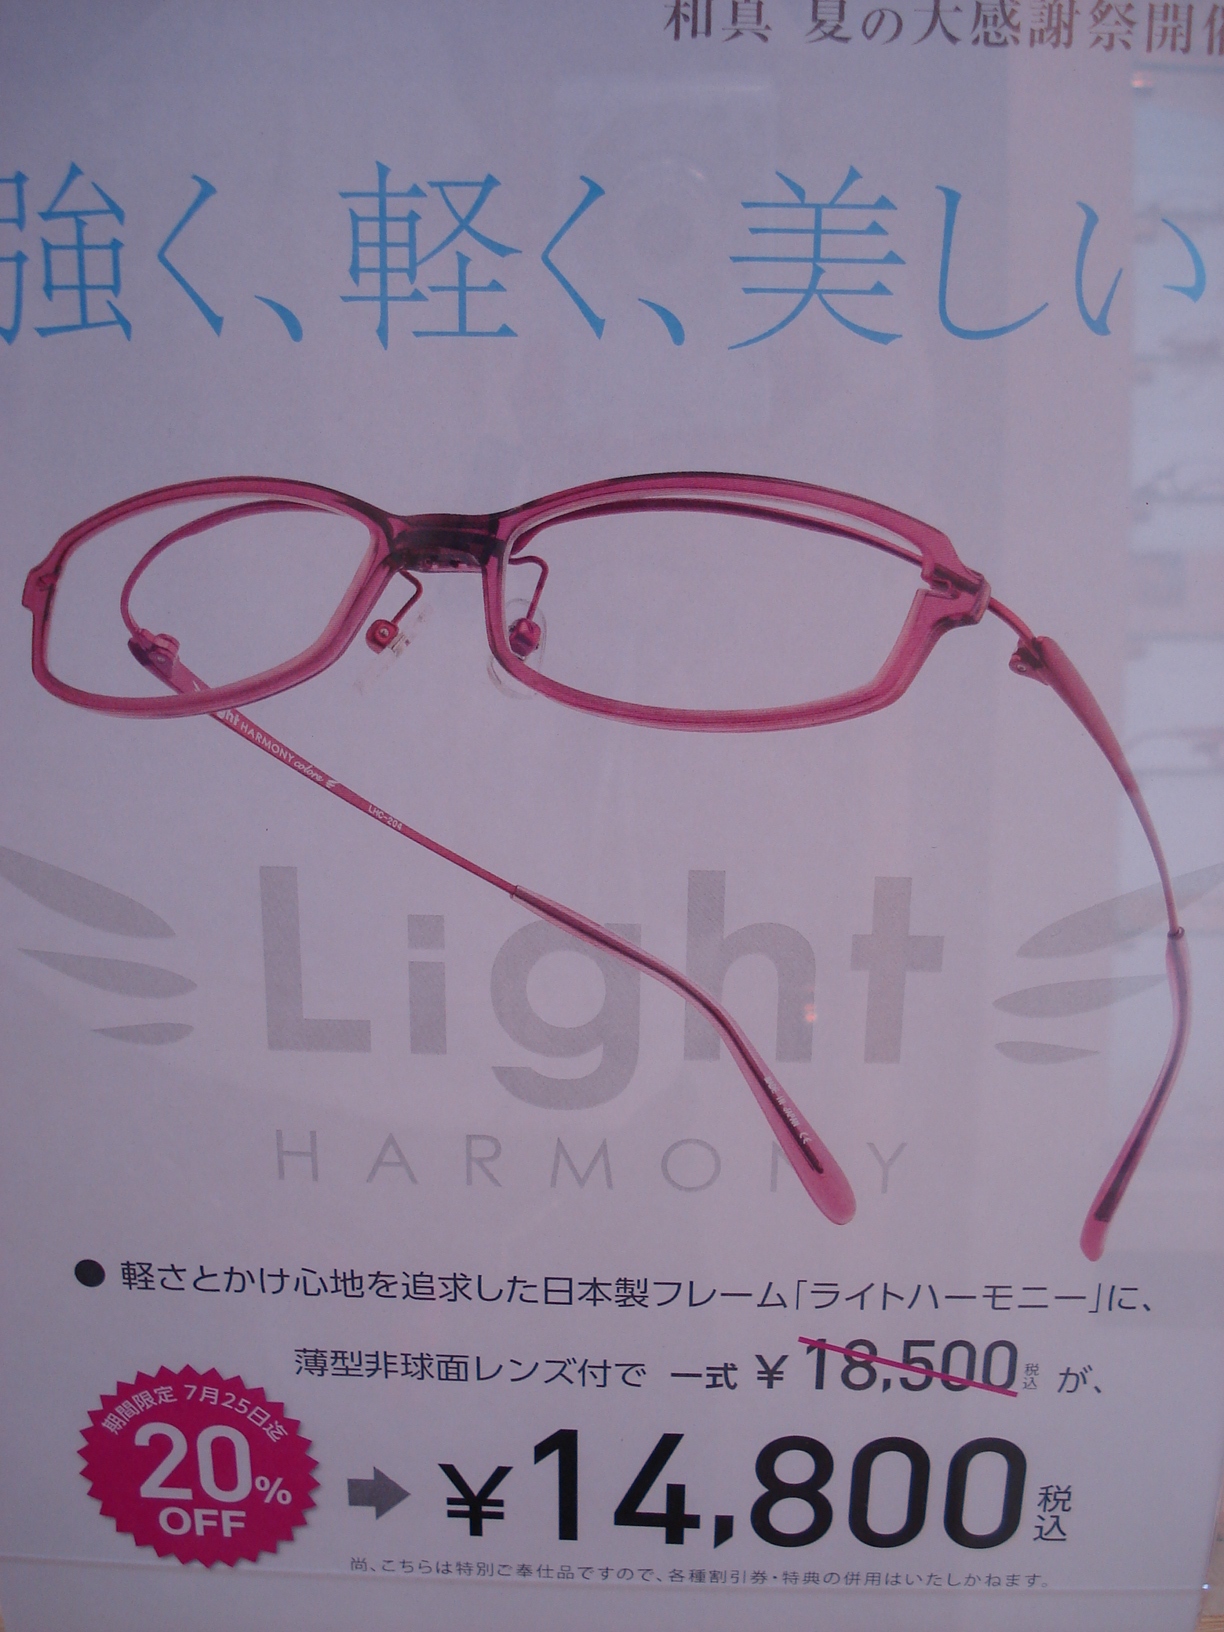 http://www.washin-optical.co.jp/blog/kenchodori/LHPOP.JPG